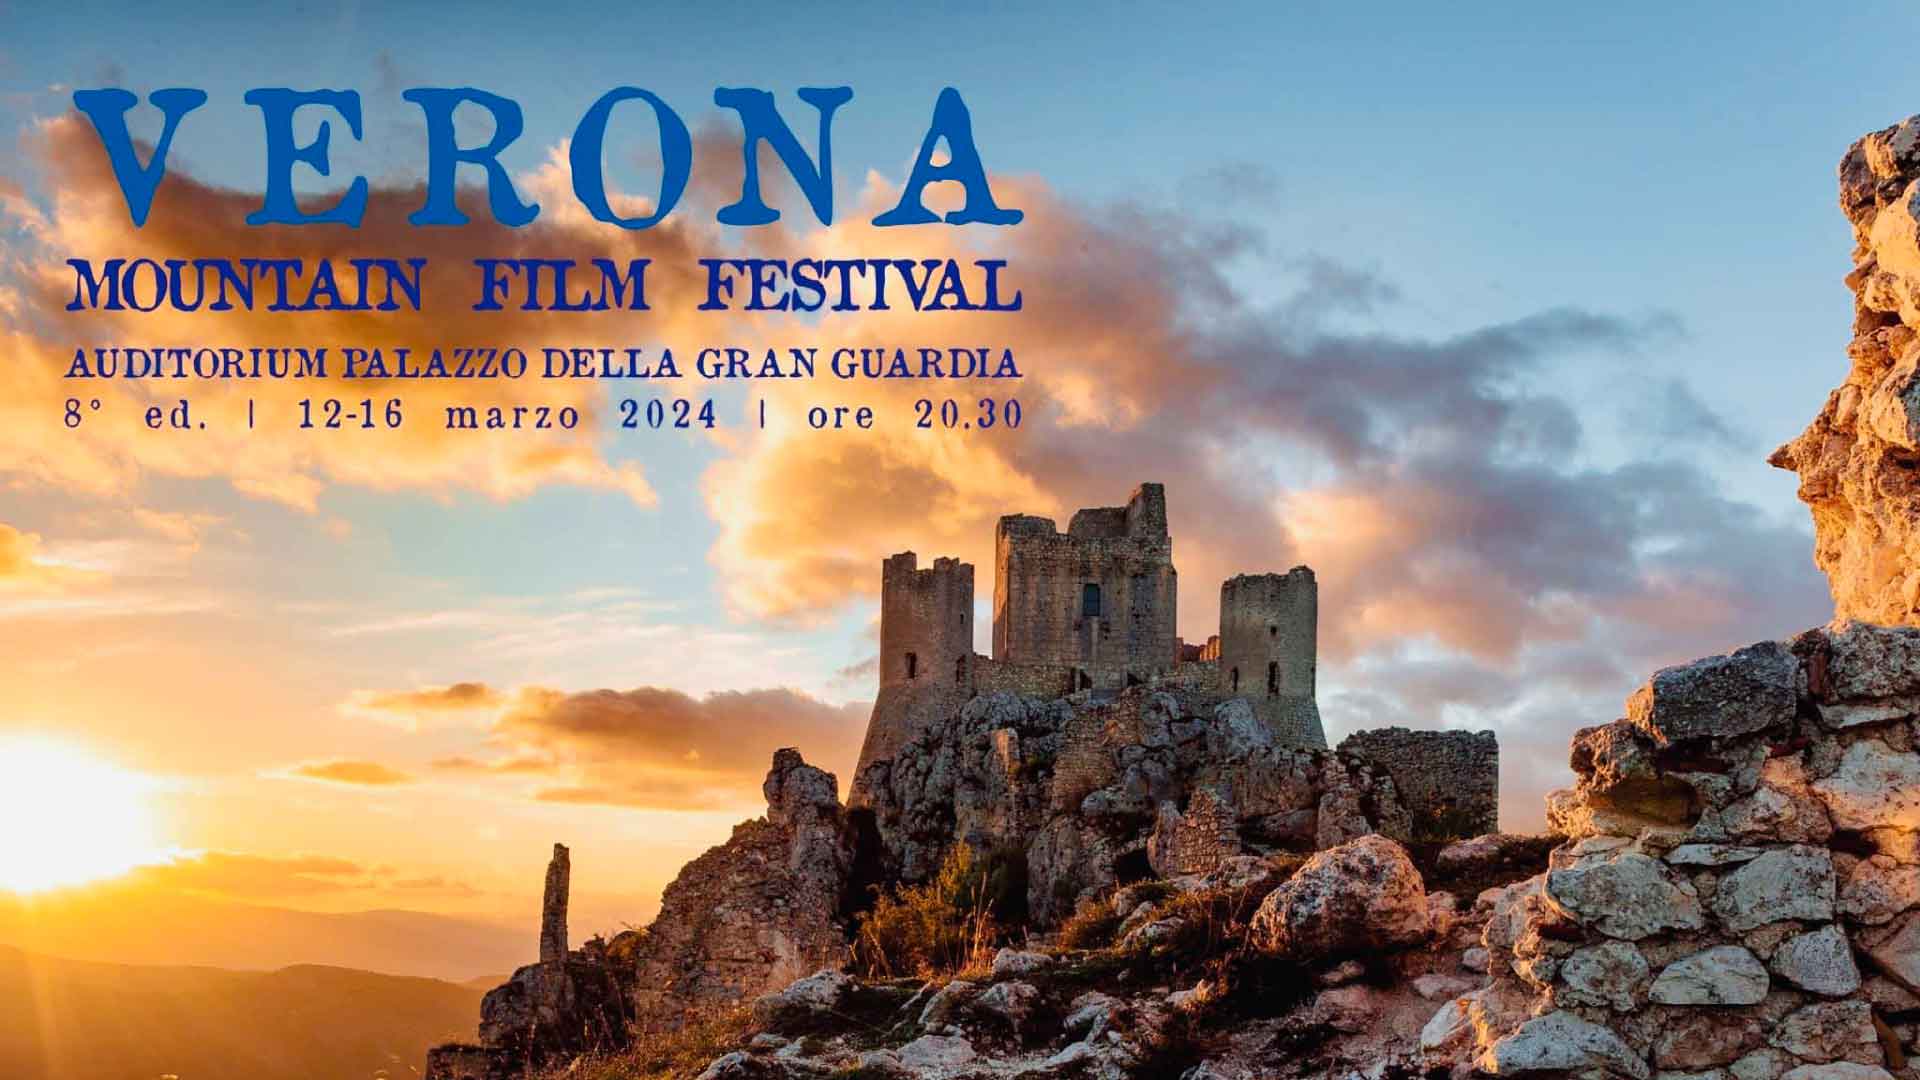 Verona Mountain Film Festival